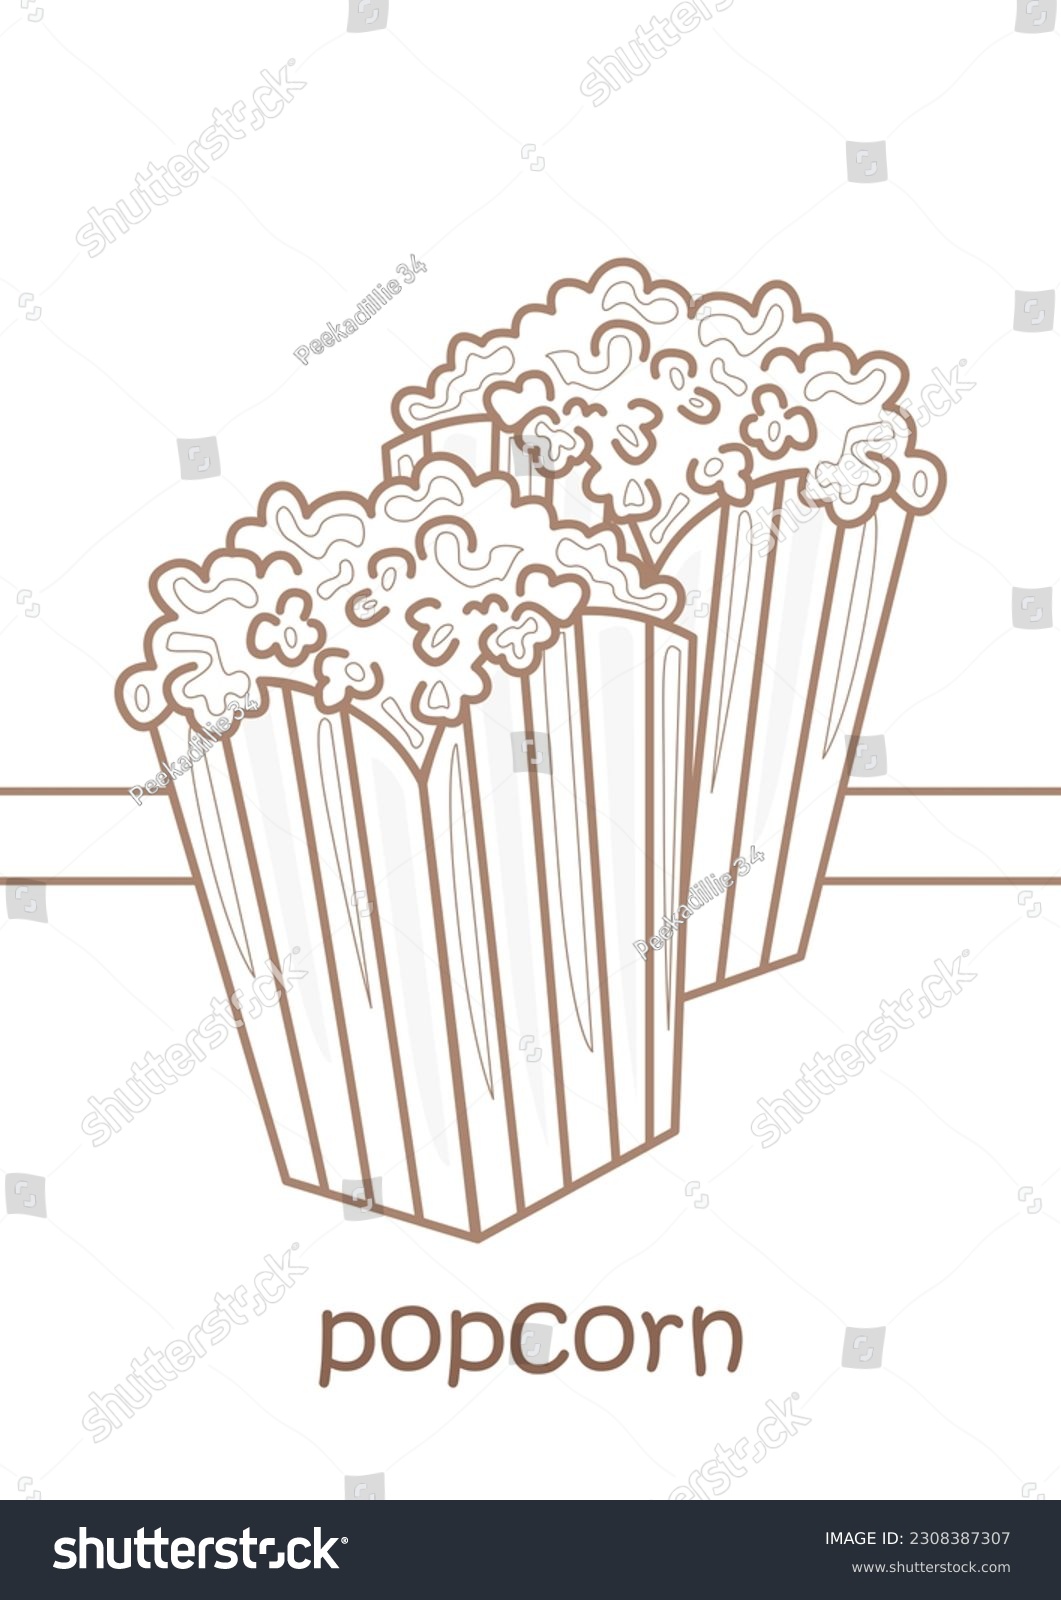 Alphabet p popcorn vocabulary school coloring stock illustration